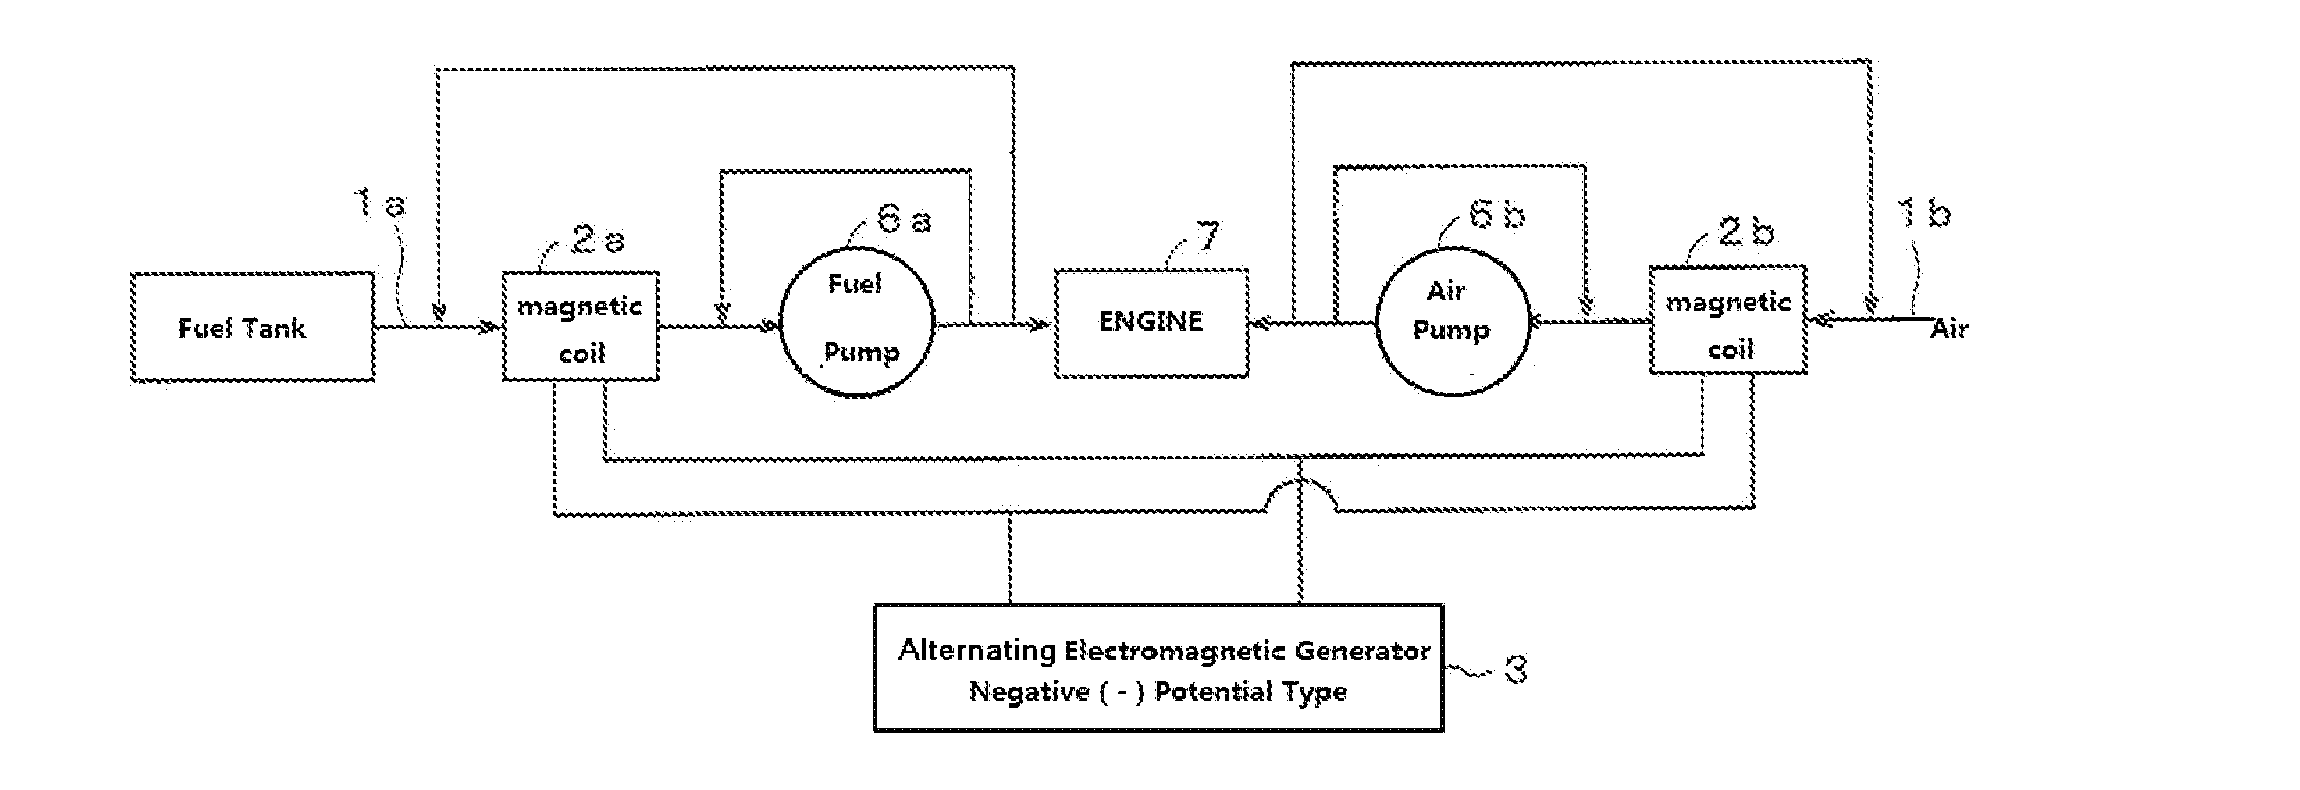 Fuel magnetization treatment method